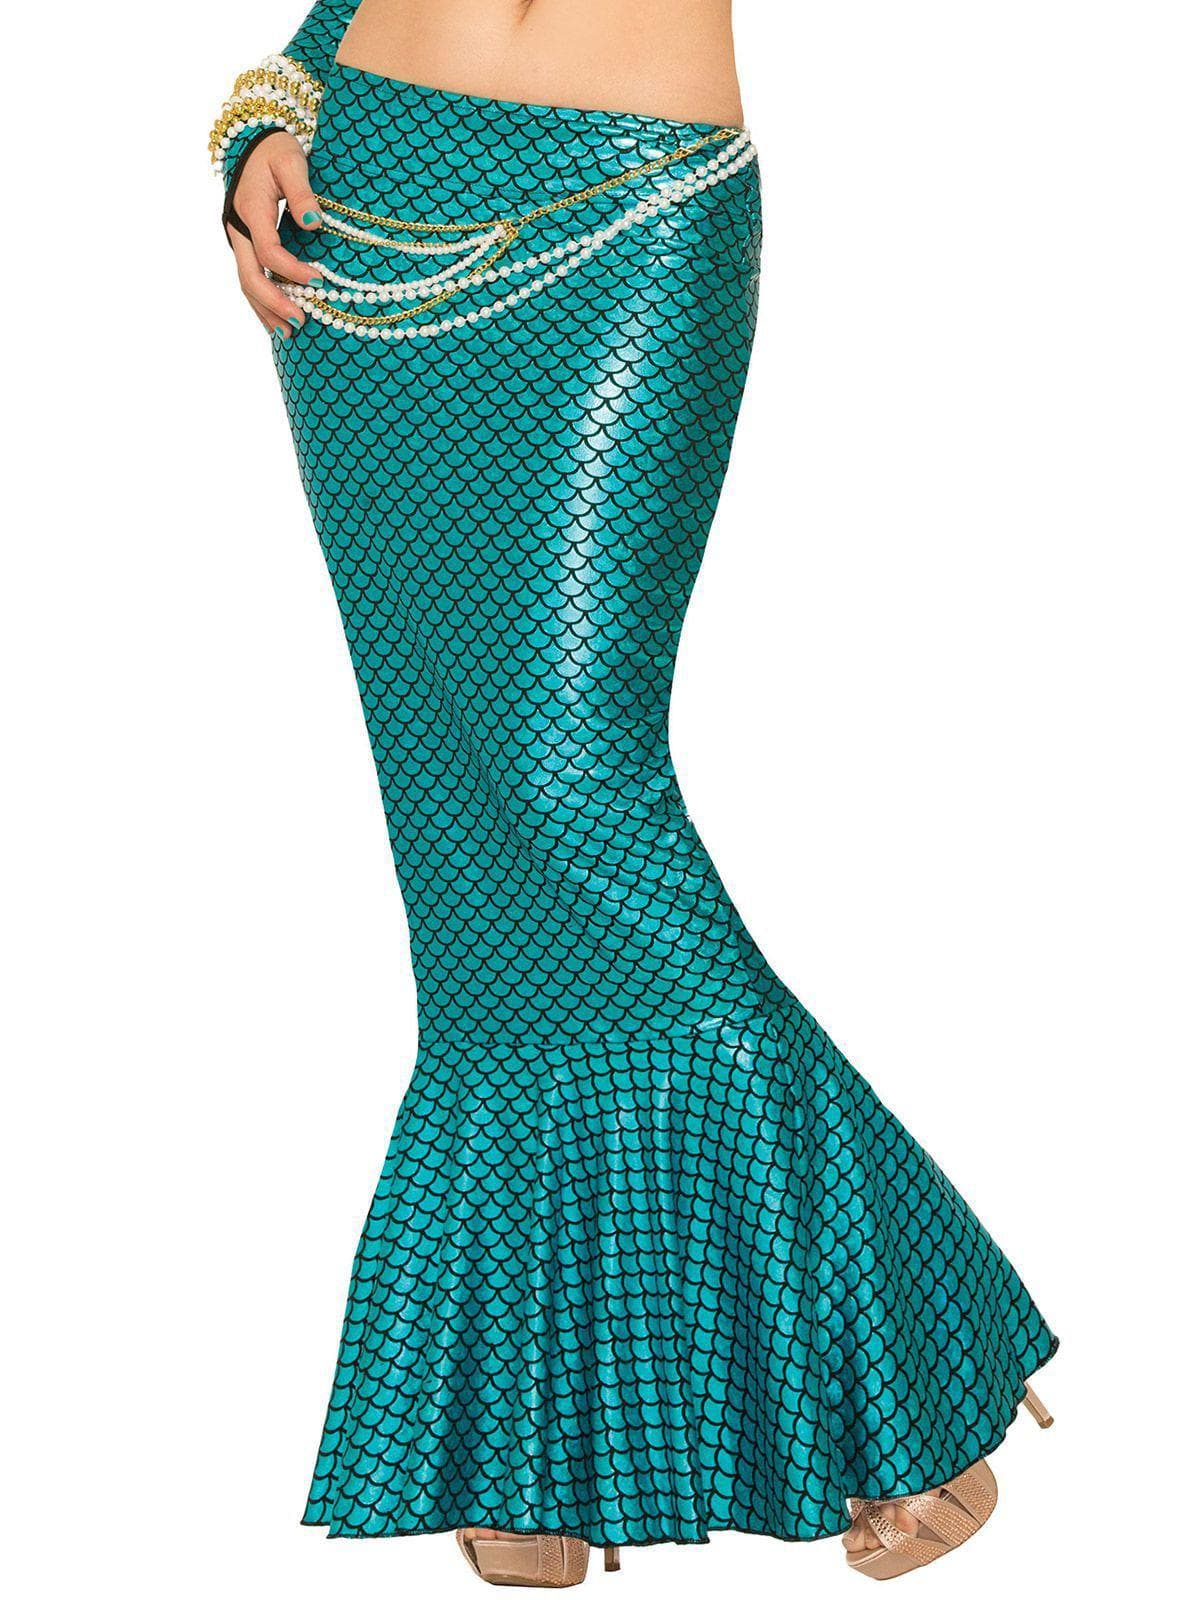 Women's Blue Mermaid Fin Skirt - costumes.com